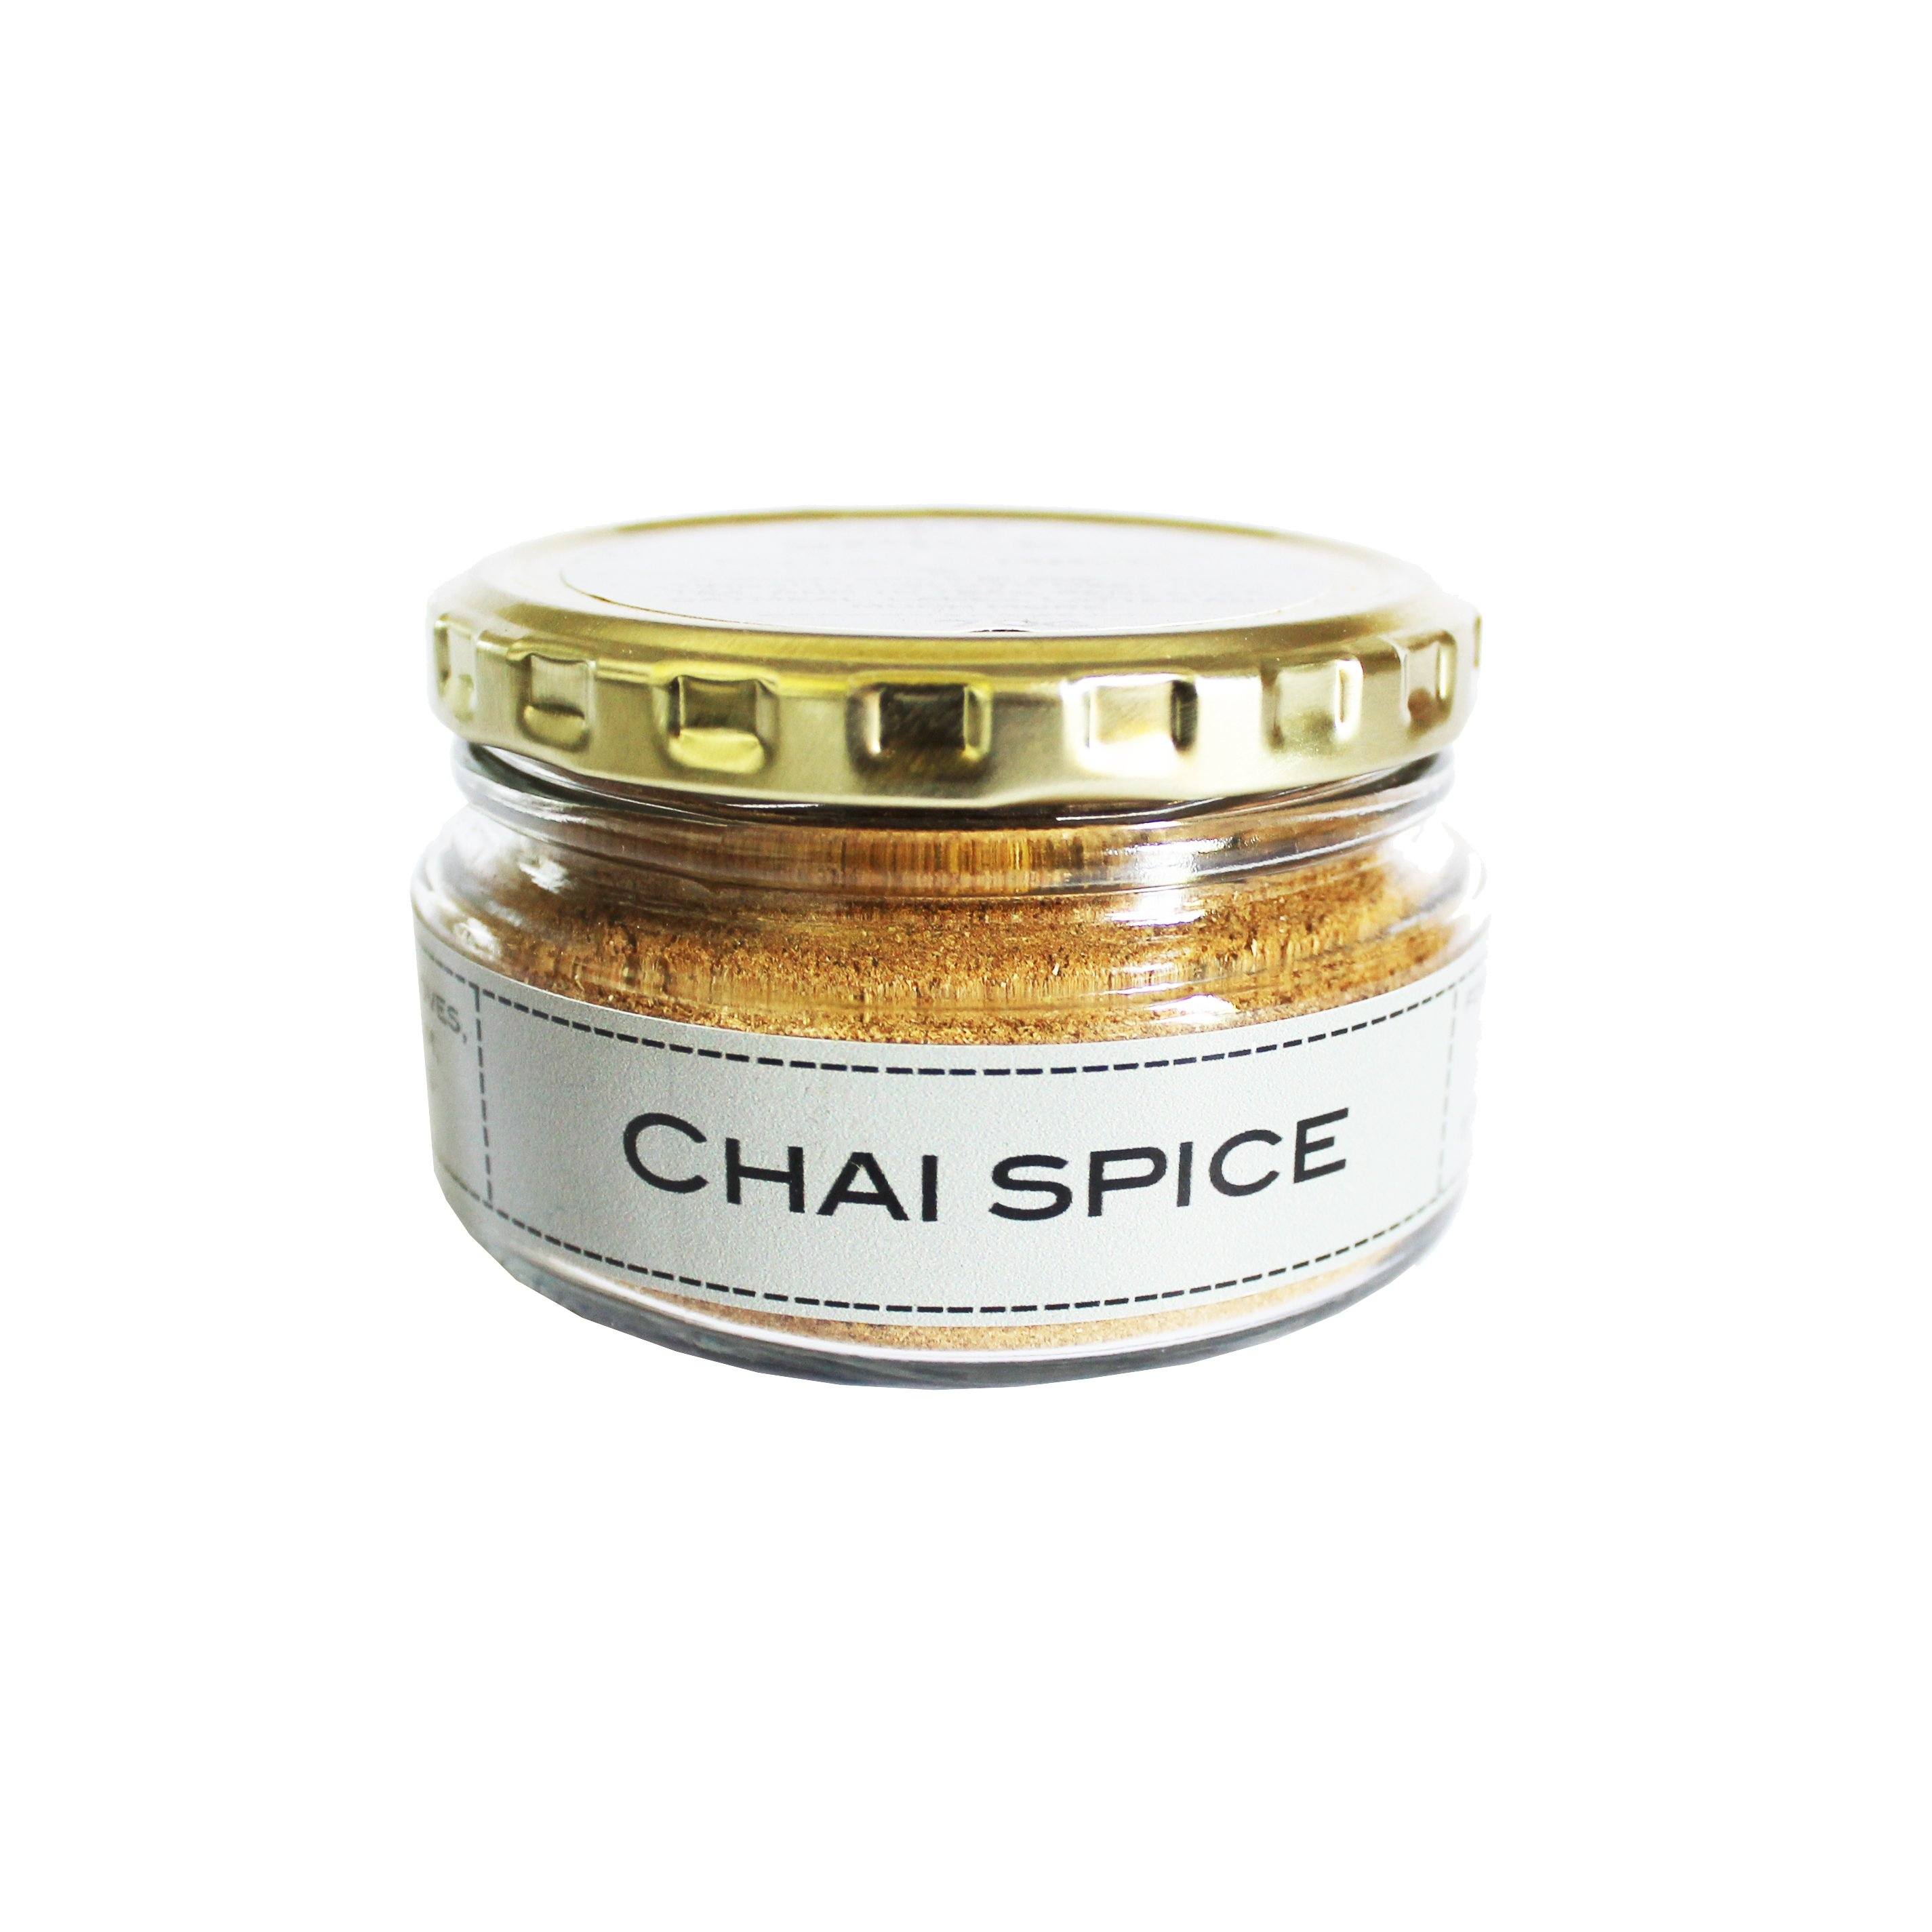 Get Spice Chai Spice 70g Salts, Herbs & Spices Get Spice 